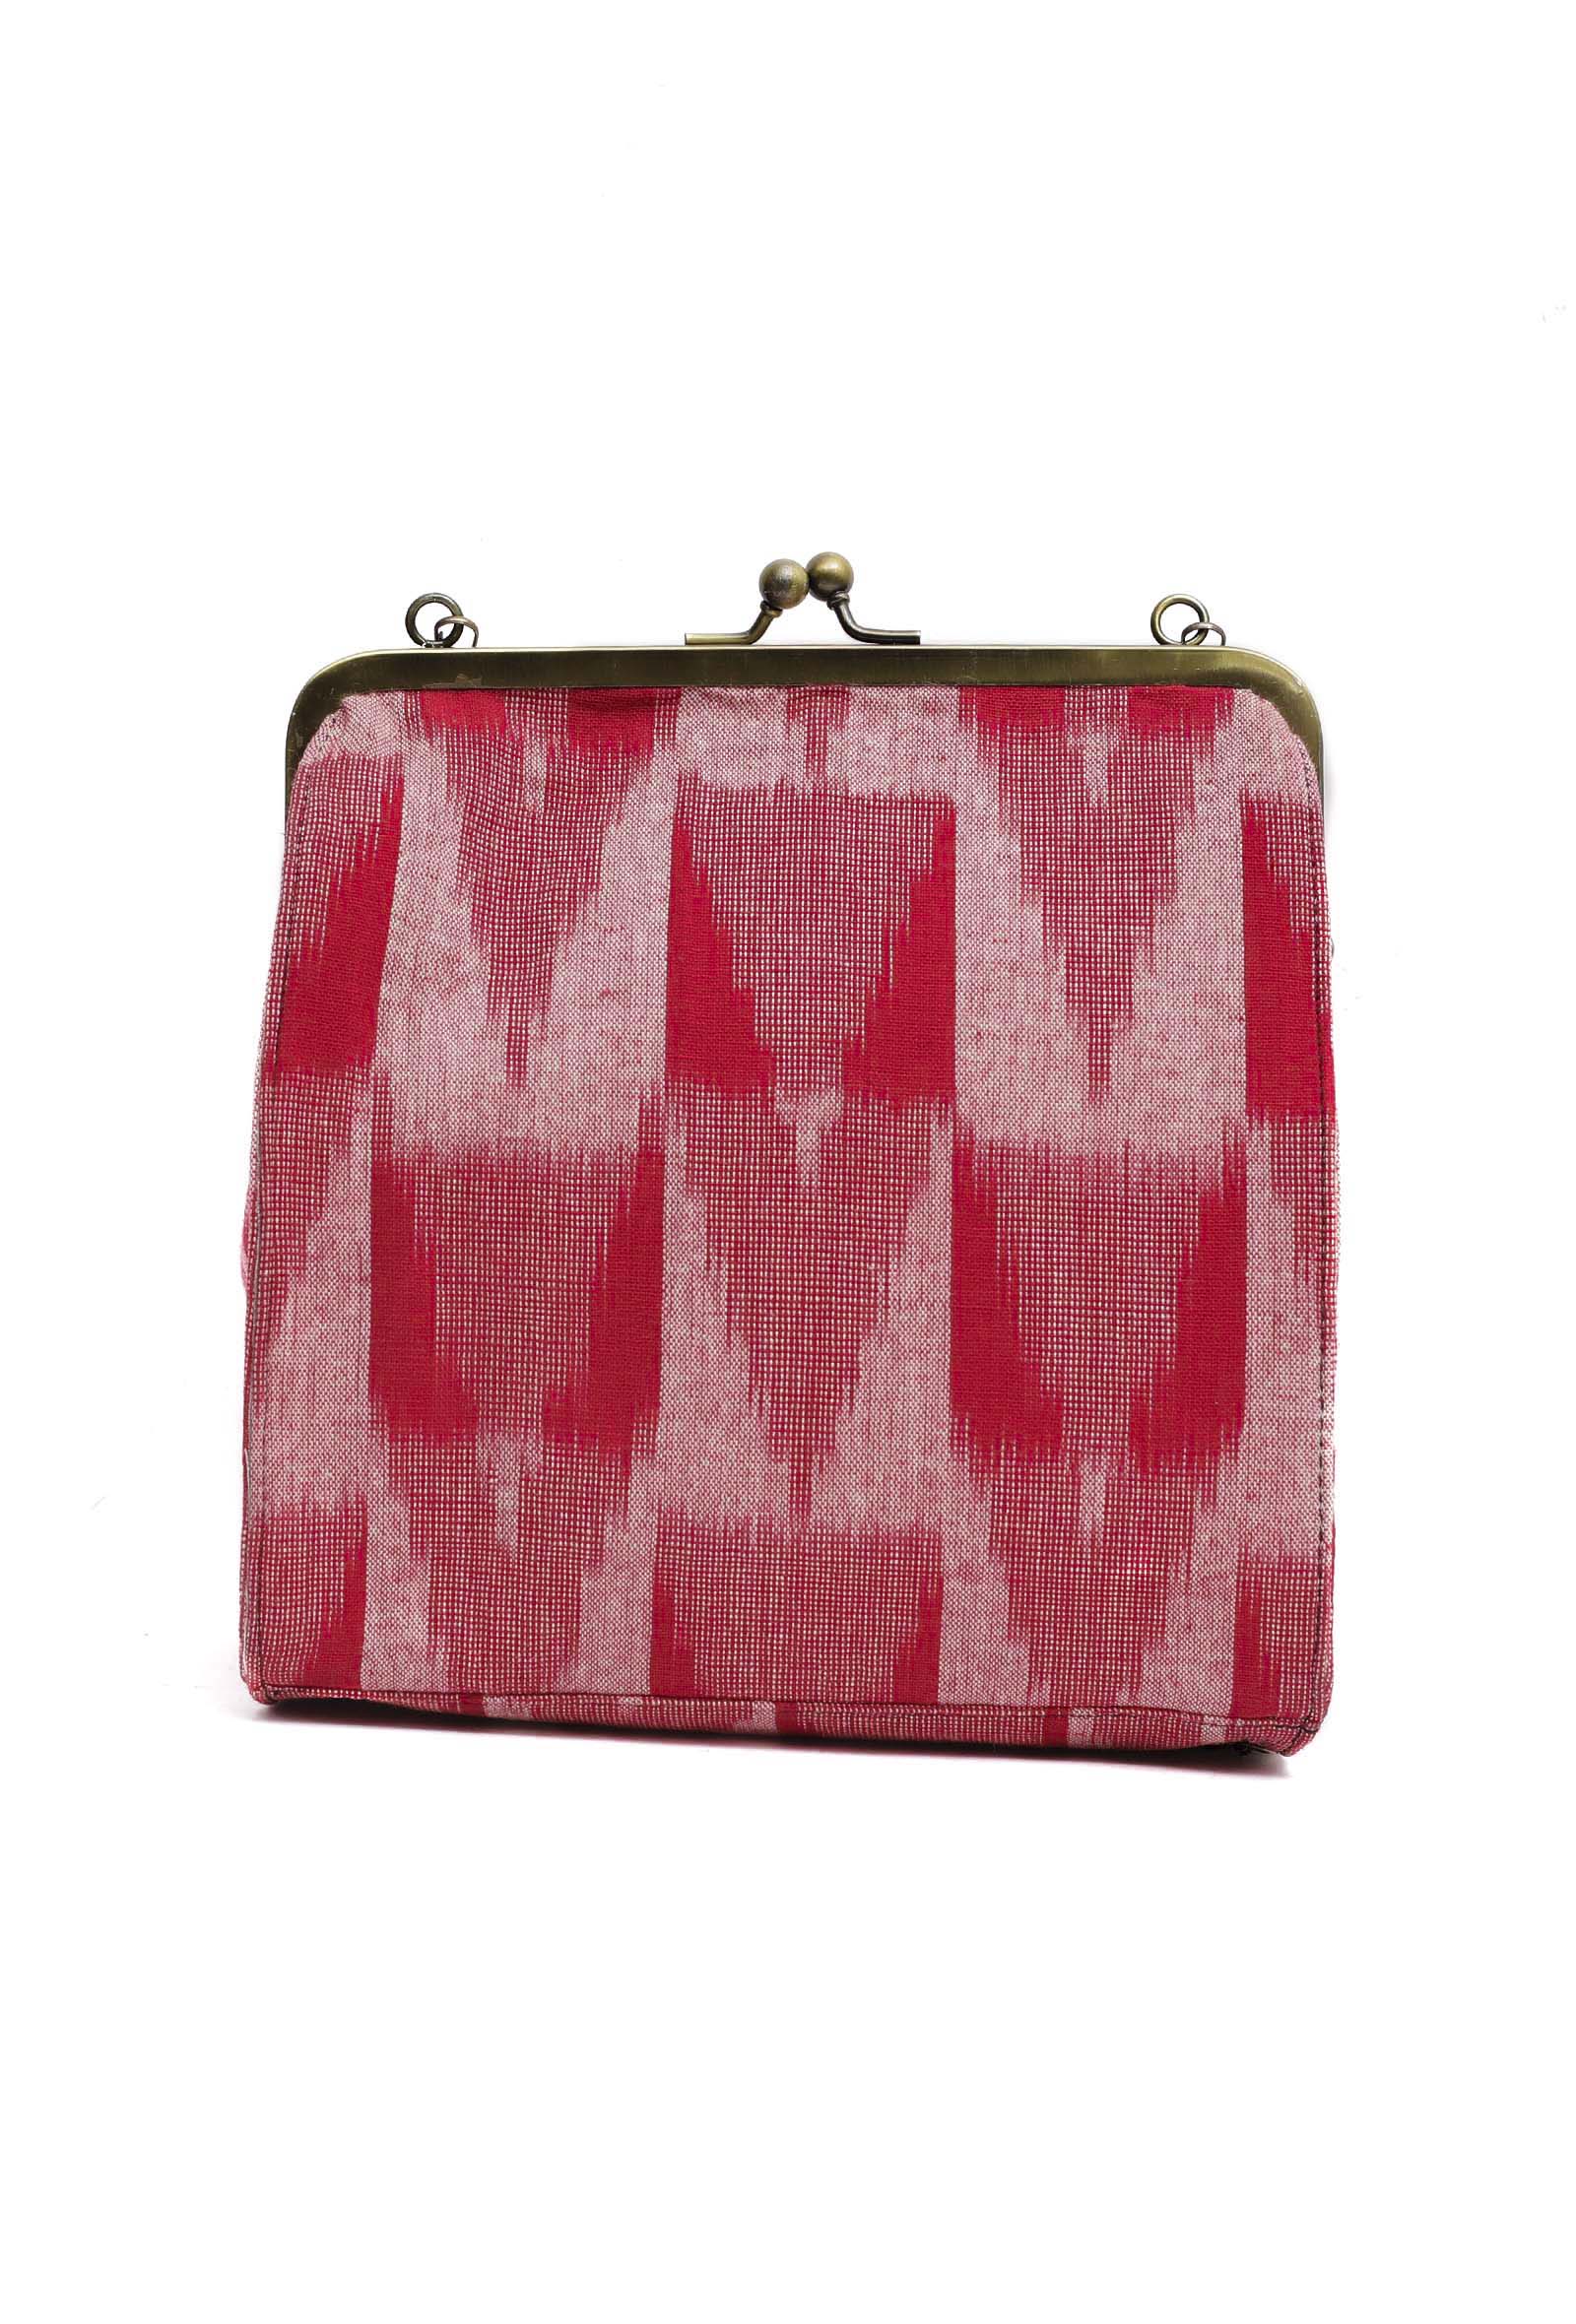 Crimson Red Ikat Square Clutch Bag